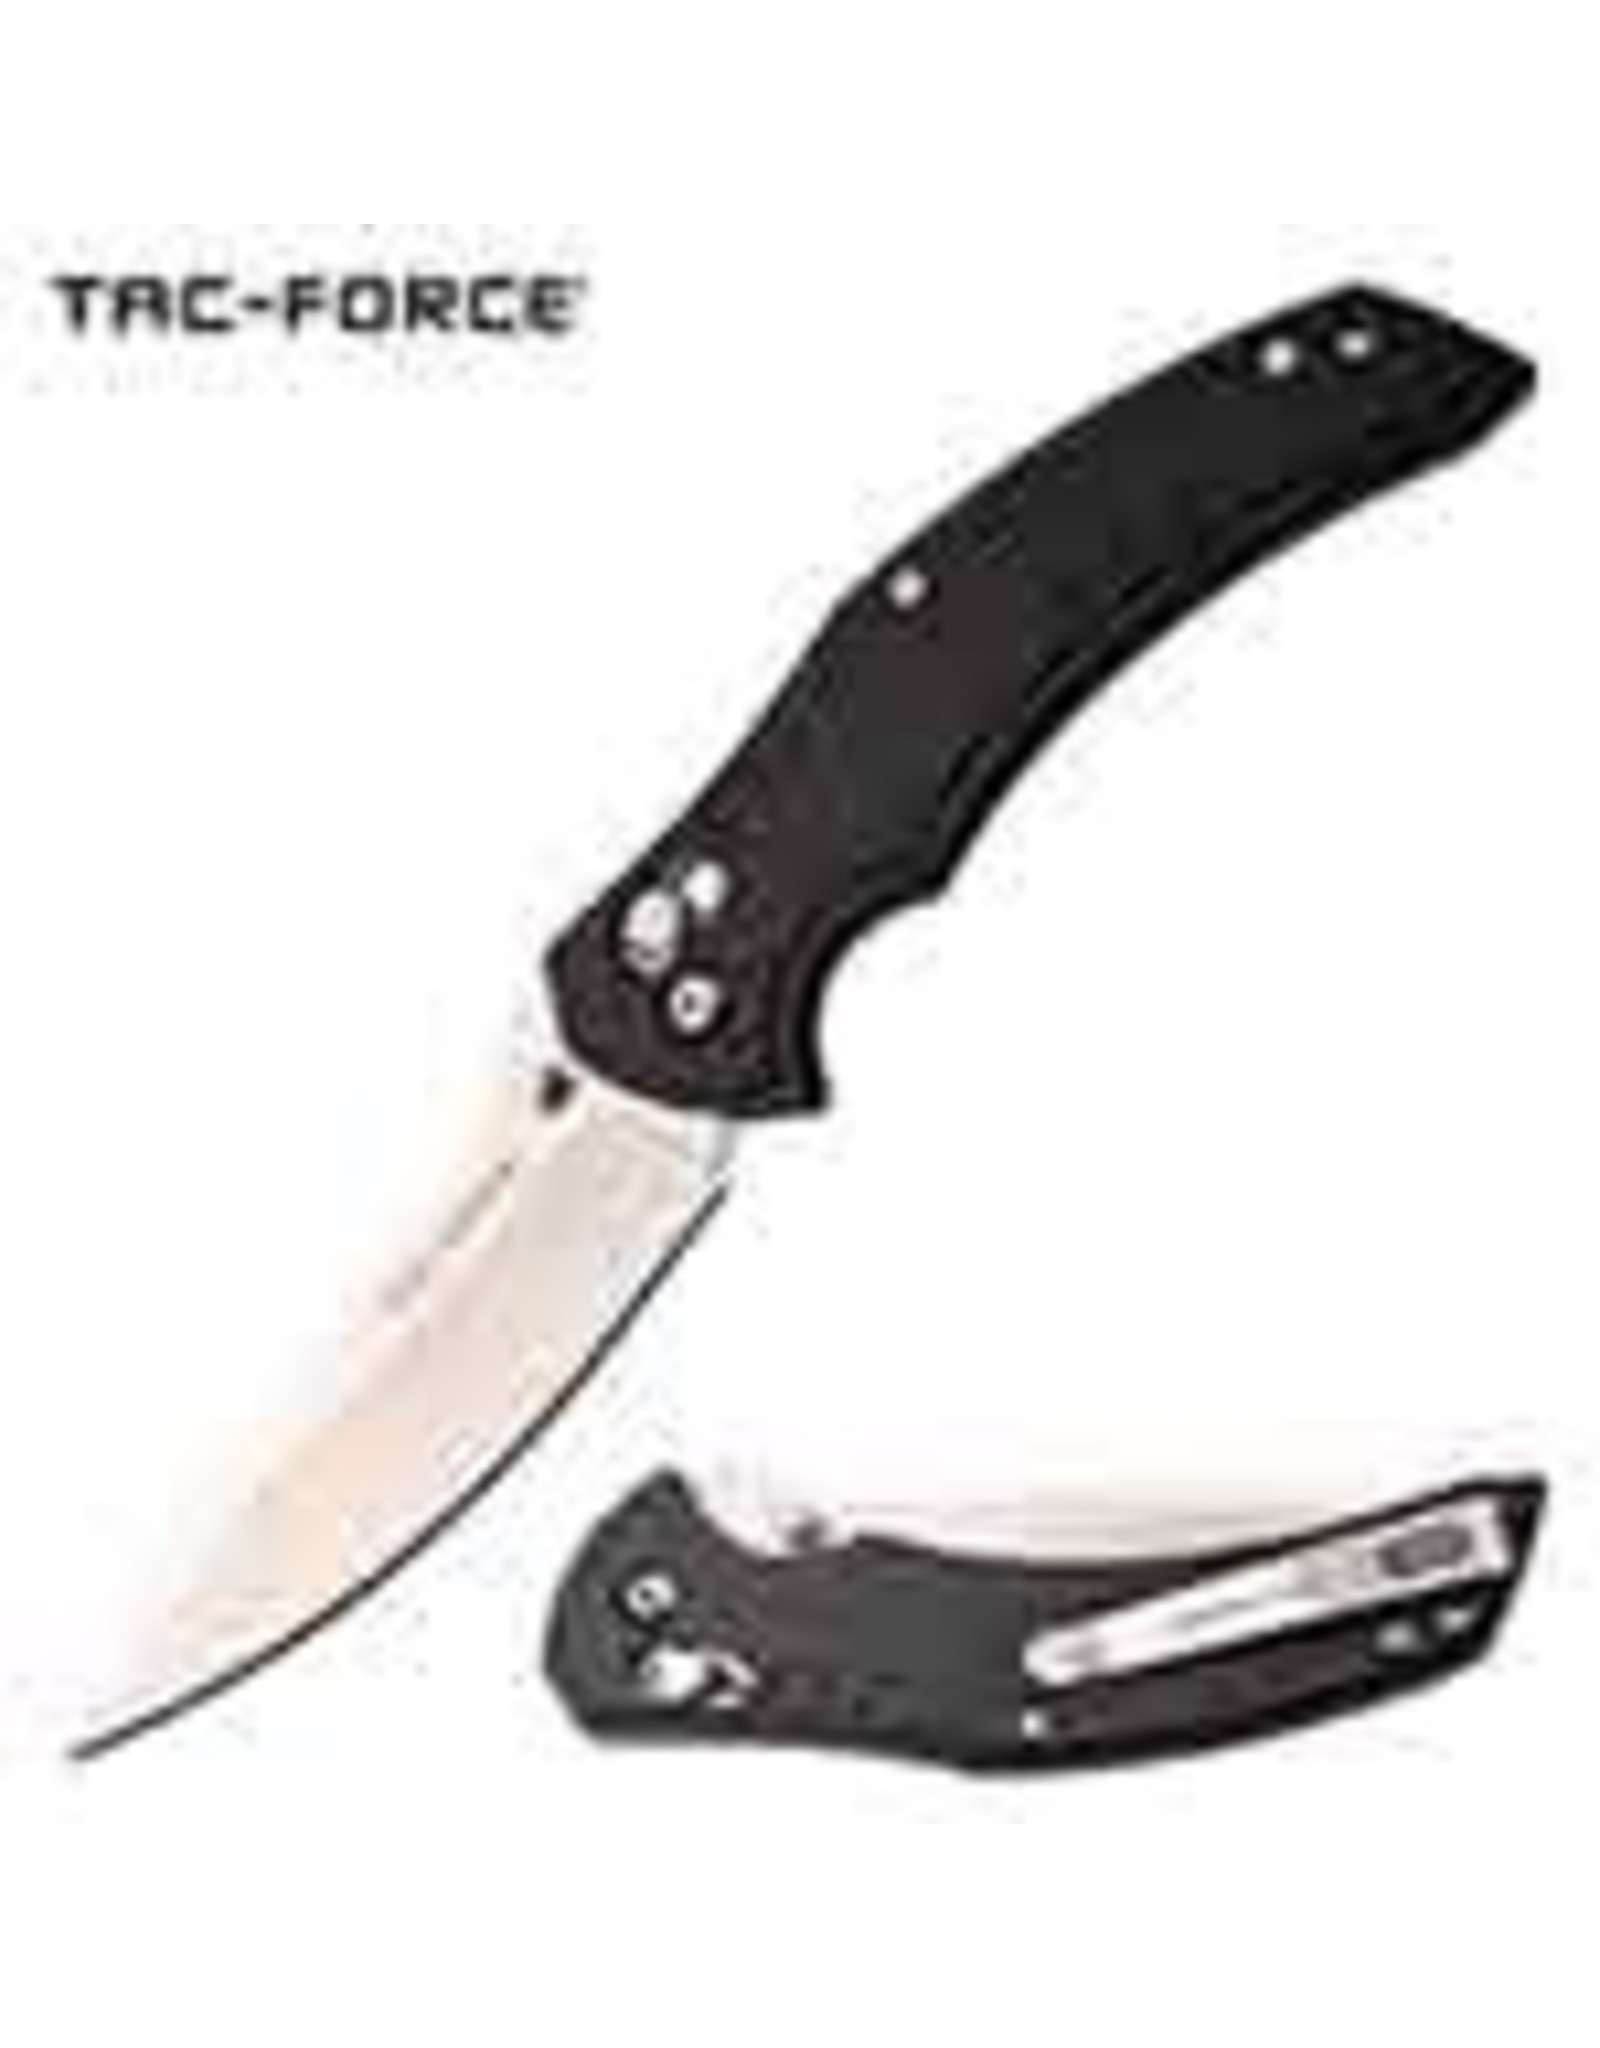 Tac-Force Tac-Force Manual Folding Knife TF-1036S